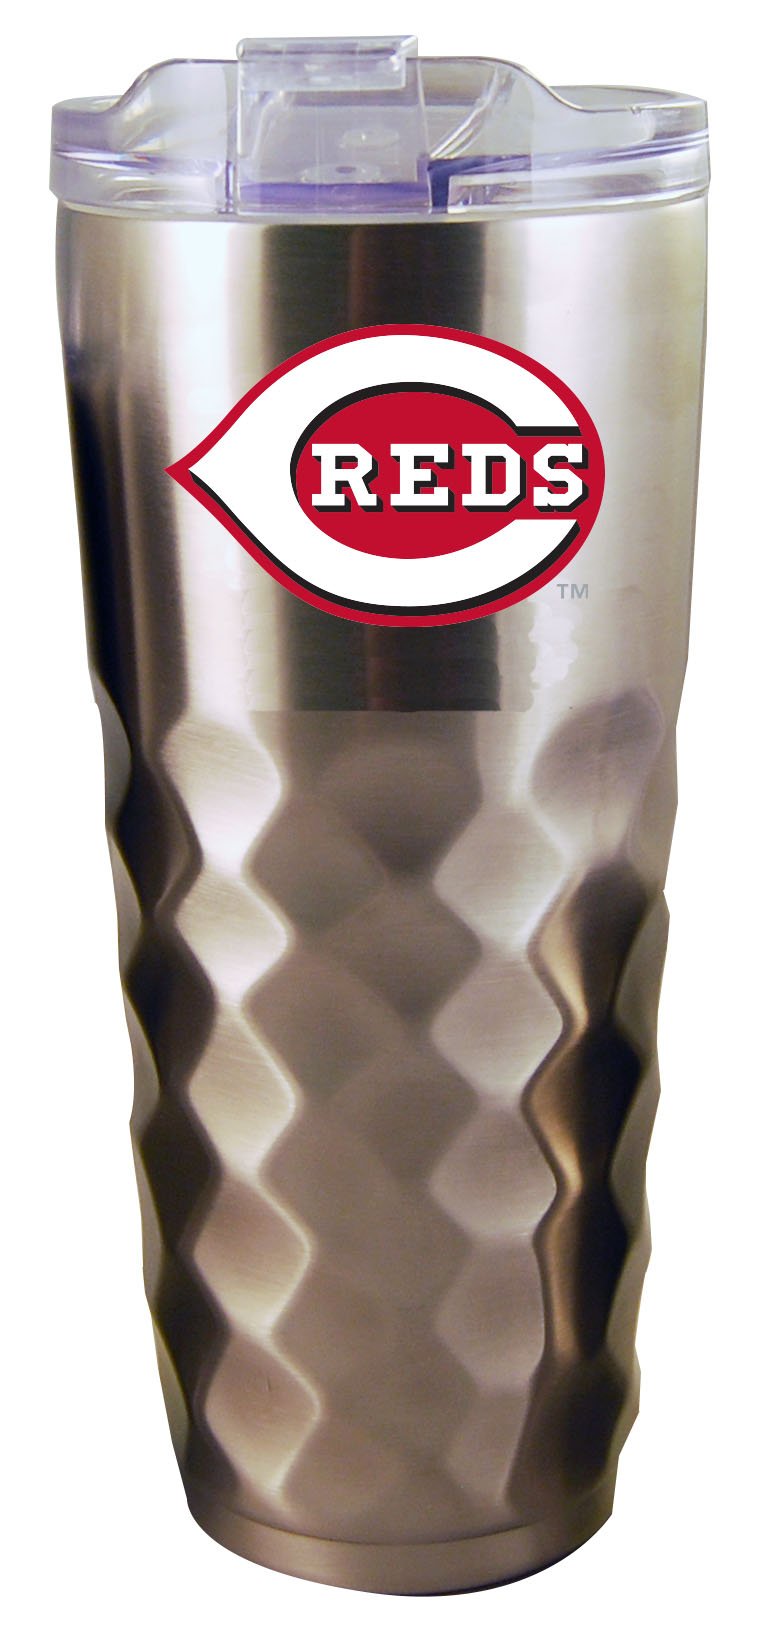 32oz Stainless Steel Diamond Tumbler | Cincinnati Reds
Cincinnati Reds, CRE, CurrentProduct, Drinkware_category_All, MLB
The Memory Company